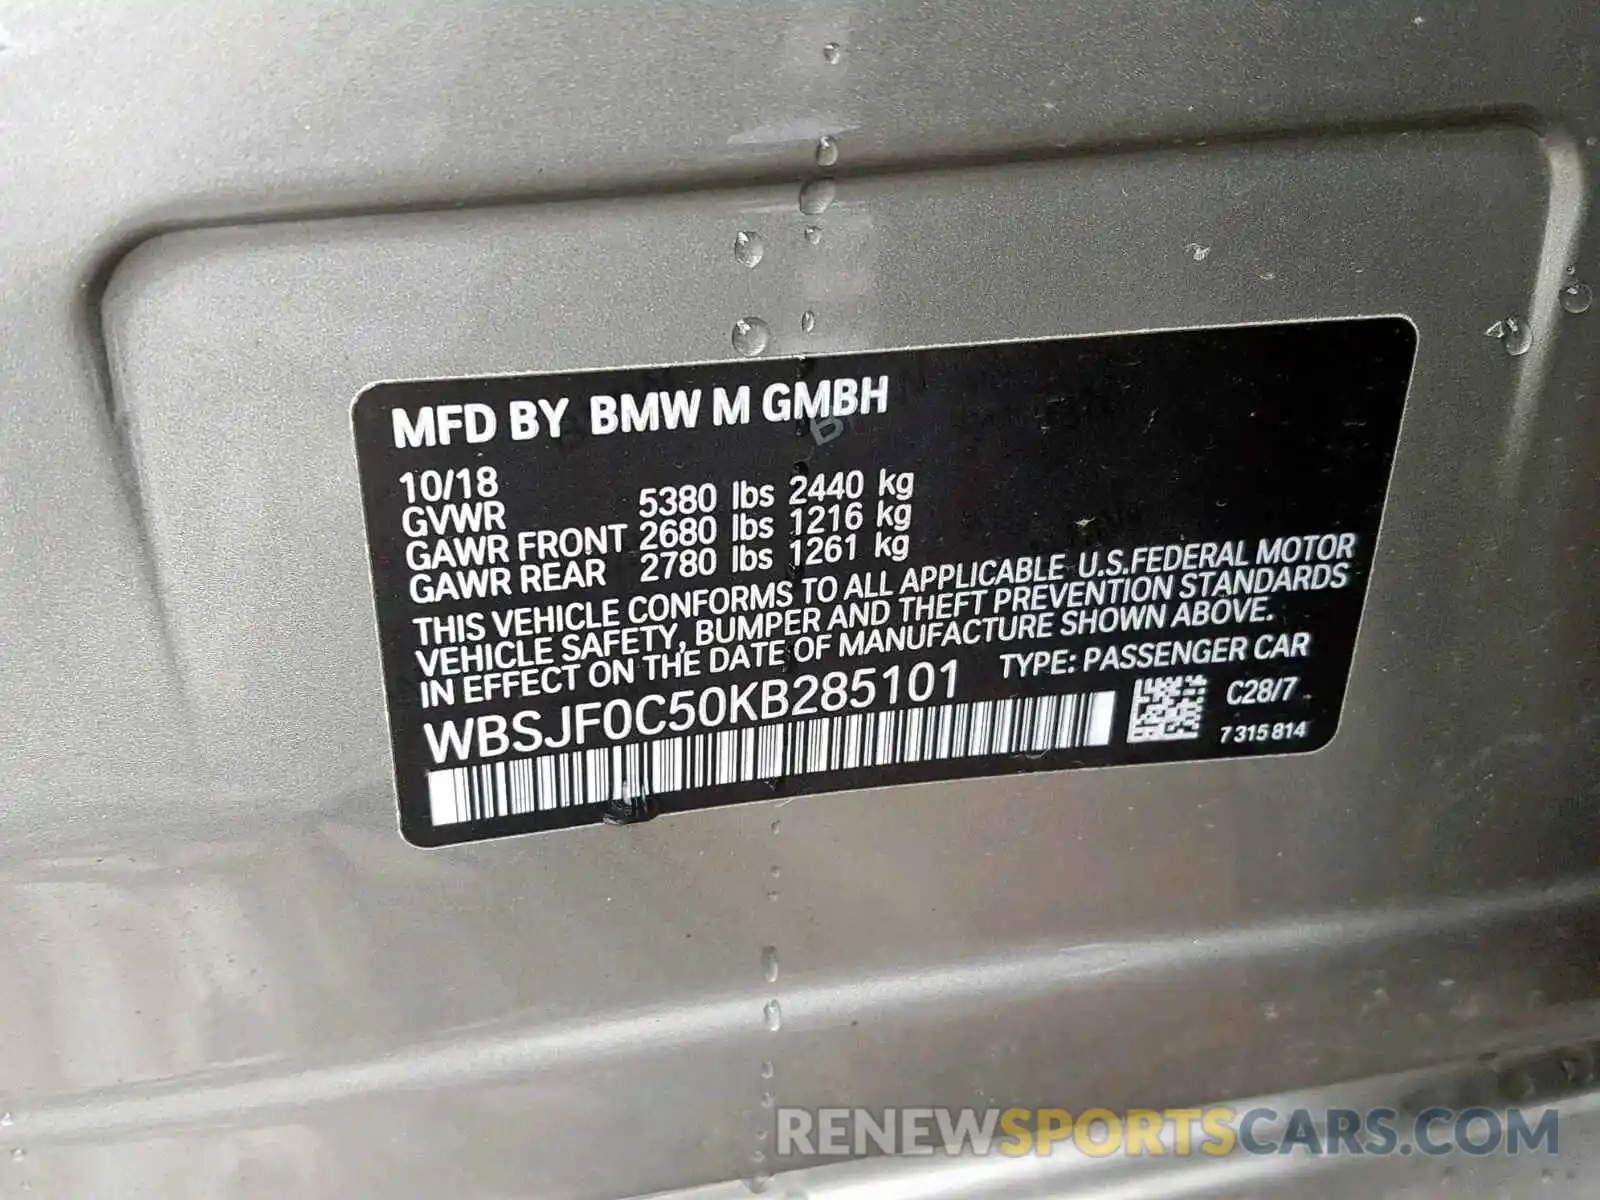 10 Фотография поврежденного автомобиля WBSJF0C50KB285101 BMW M5 2019